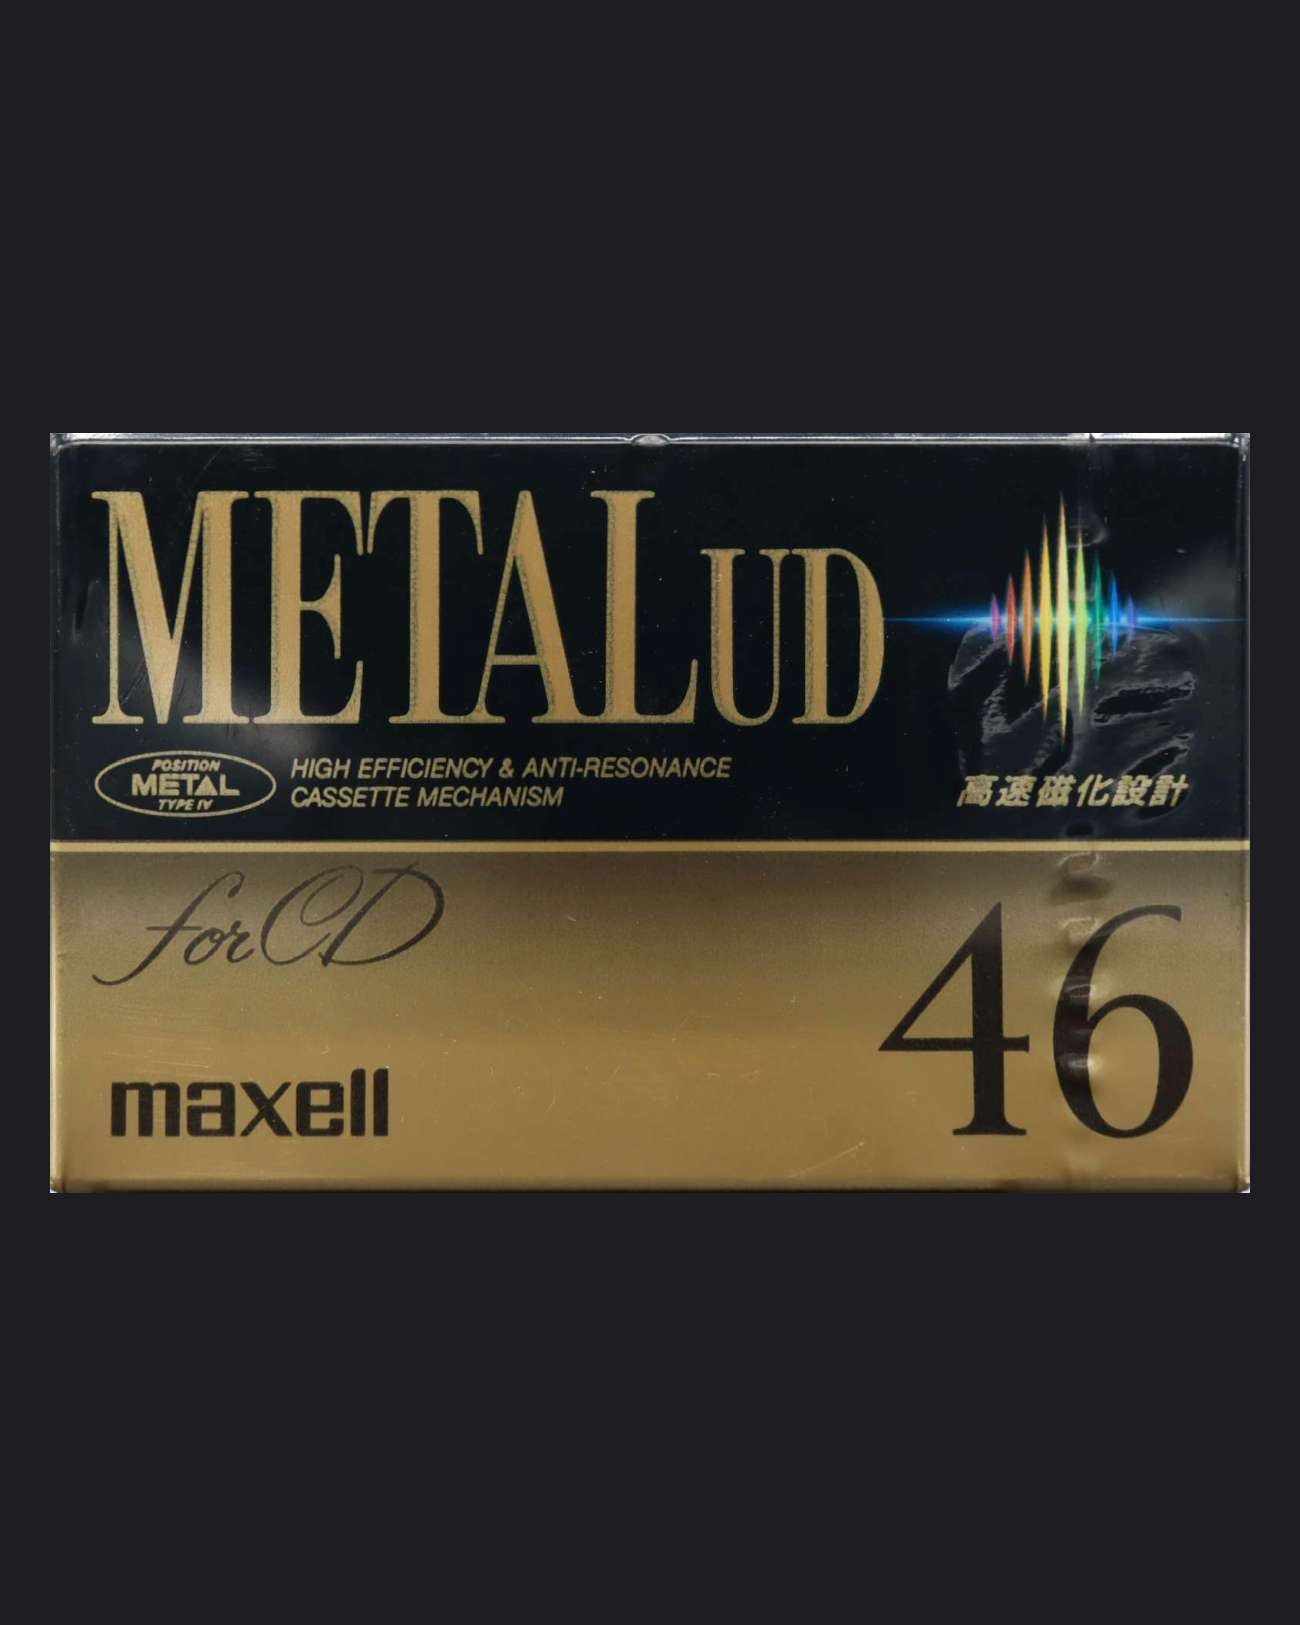 Maxell Metal UD (1992-1993 JP)